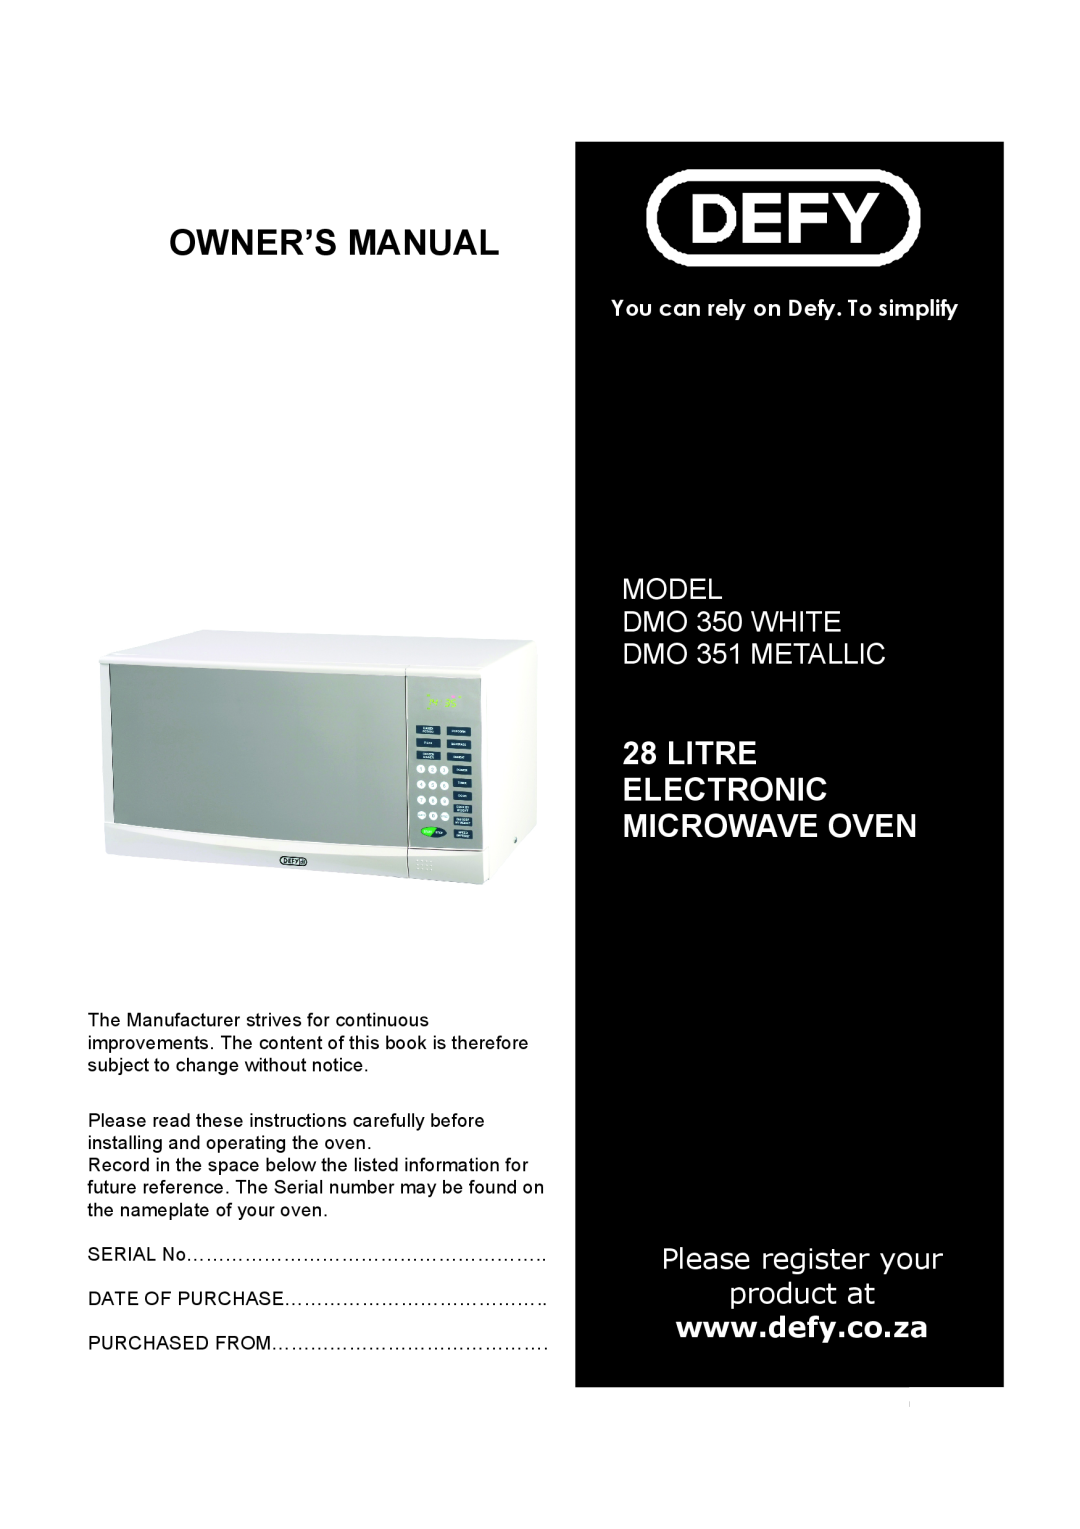 Defy Appliances DMO 351 METALLIC, DMO 350 WHITE manual $& #, + #, 0,-/////////////##, 0,-,//////////////#, # $ %, #-!$!+$ 